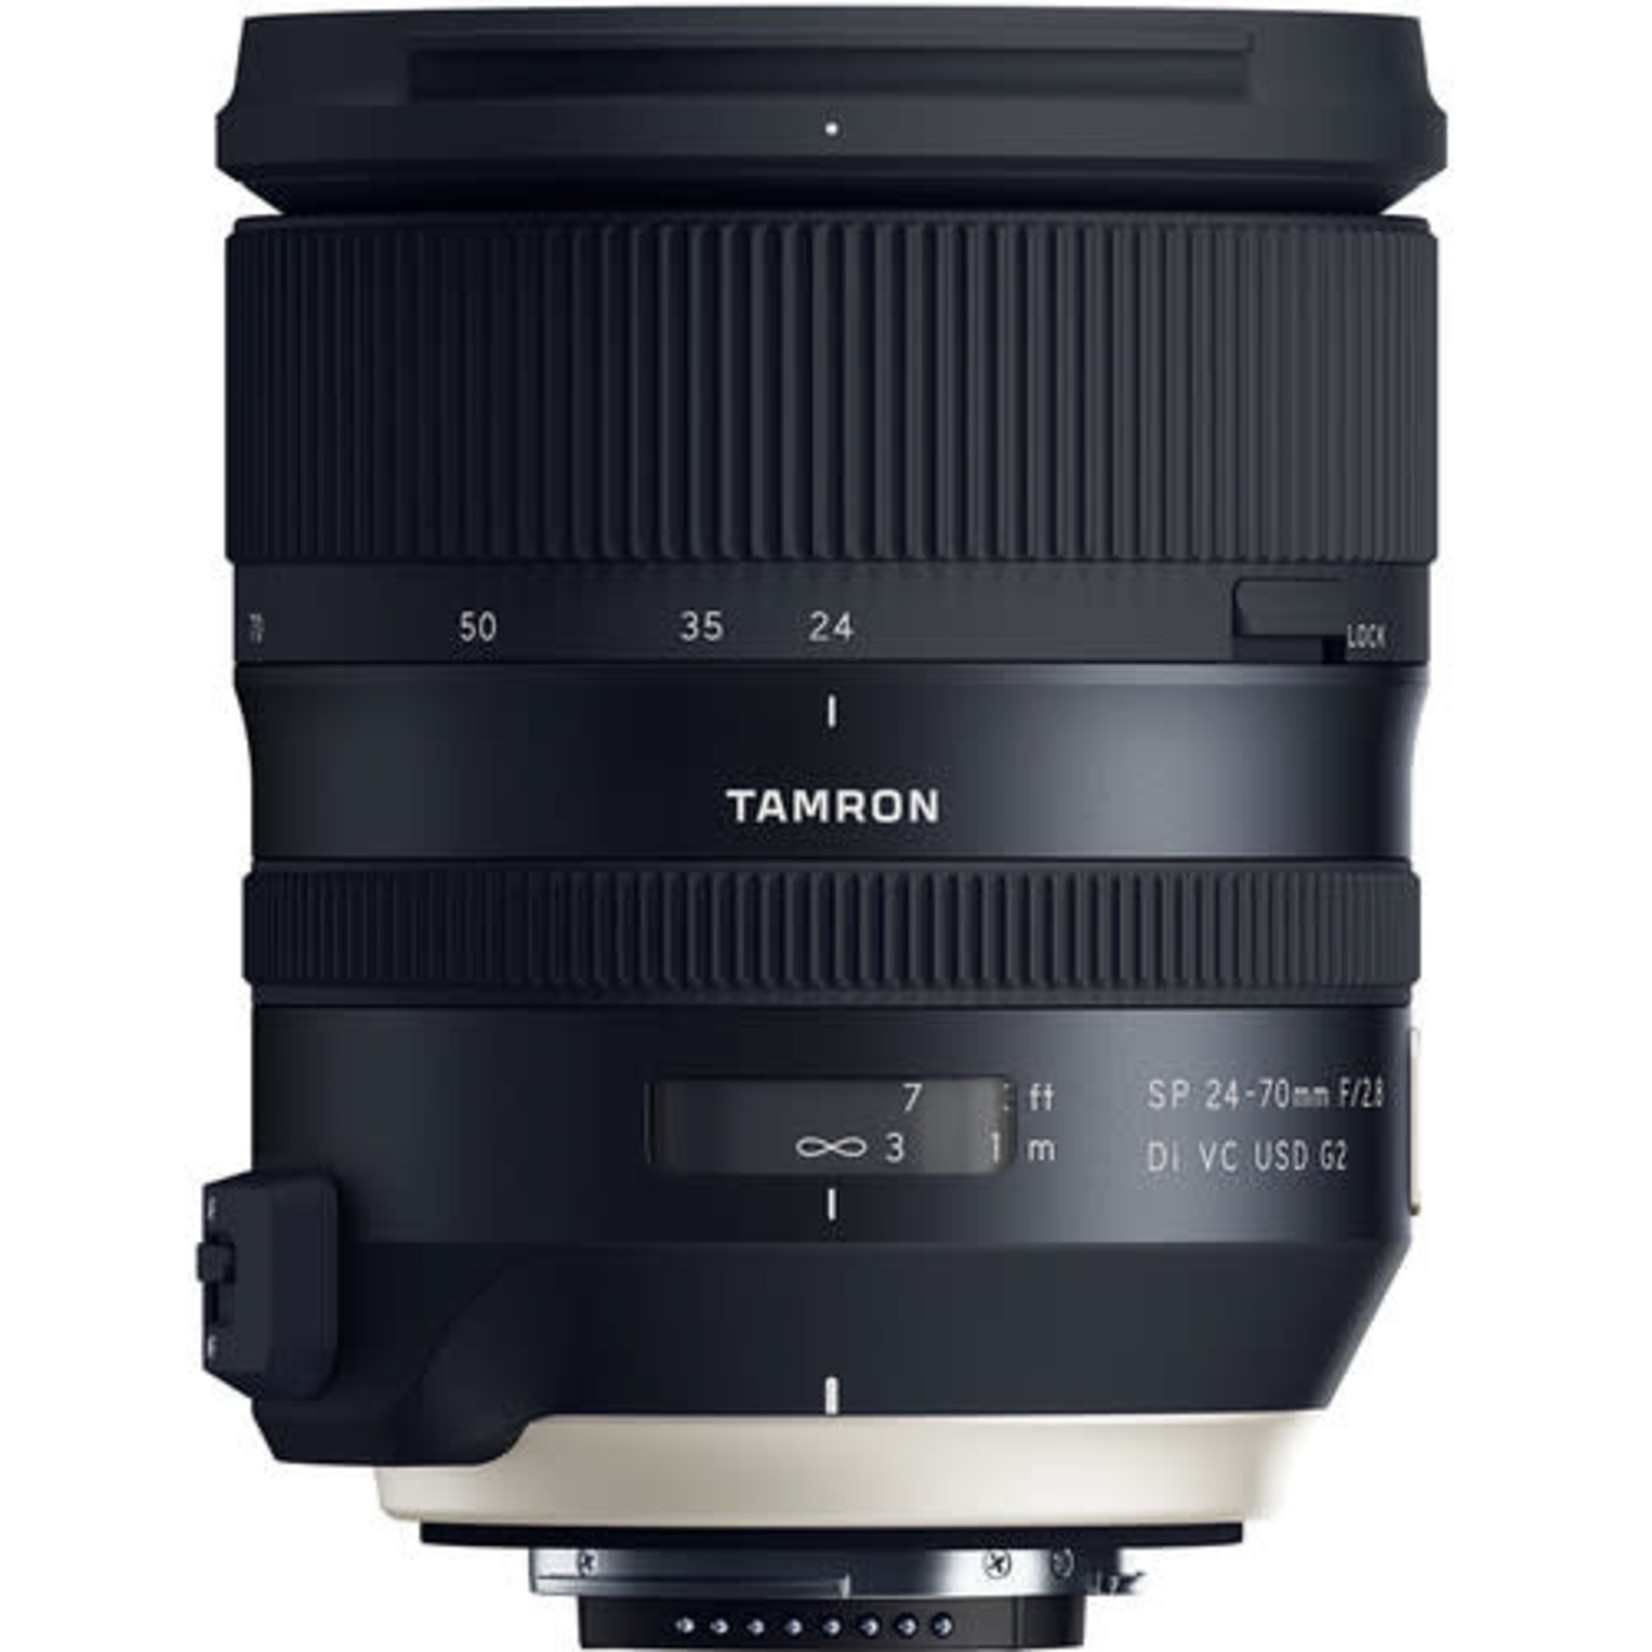 Tamron Tamron SP 24-70mm f/2.8 Di VC USD G2 Lens for Nikon F